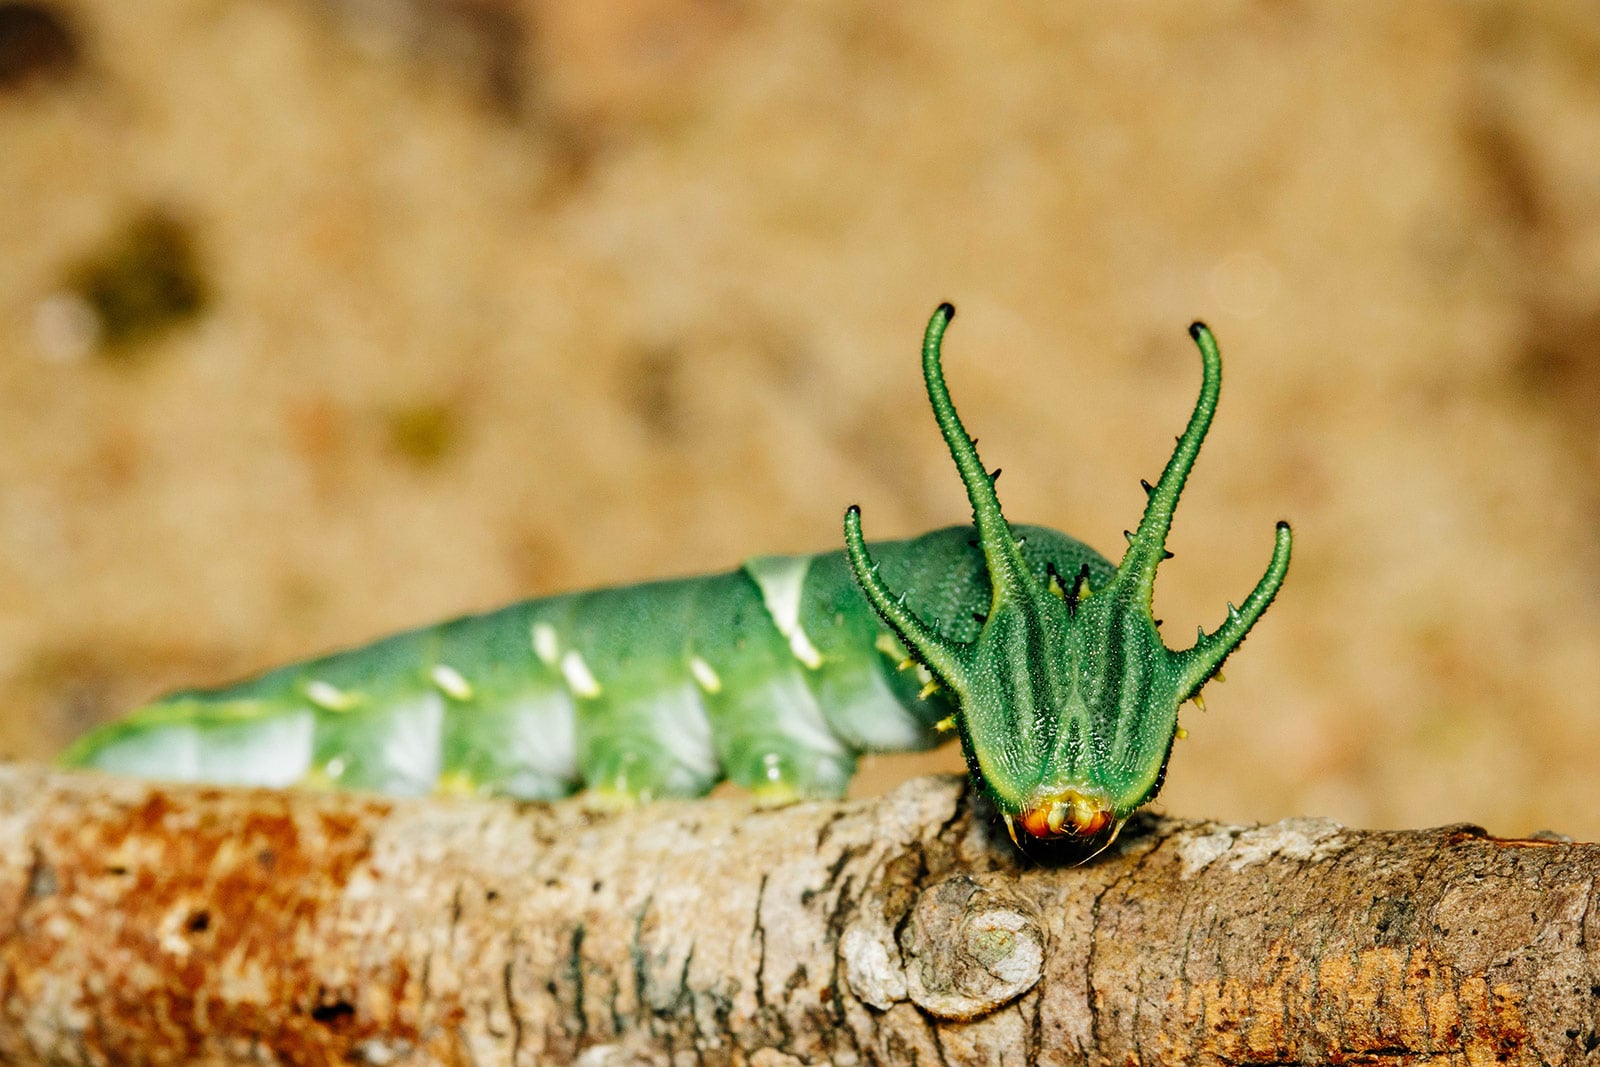 Dragonhead caterpillar